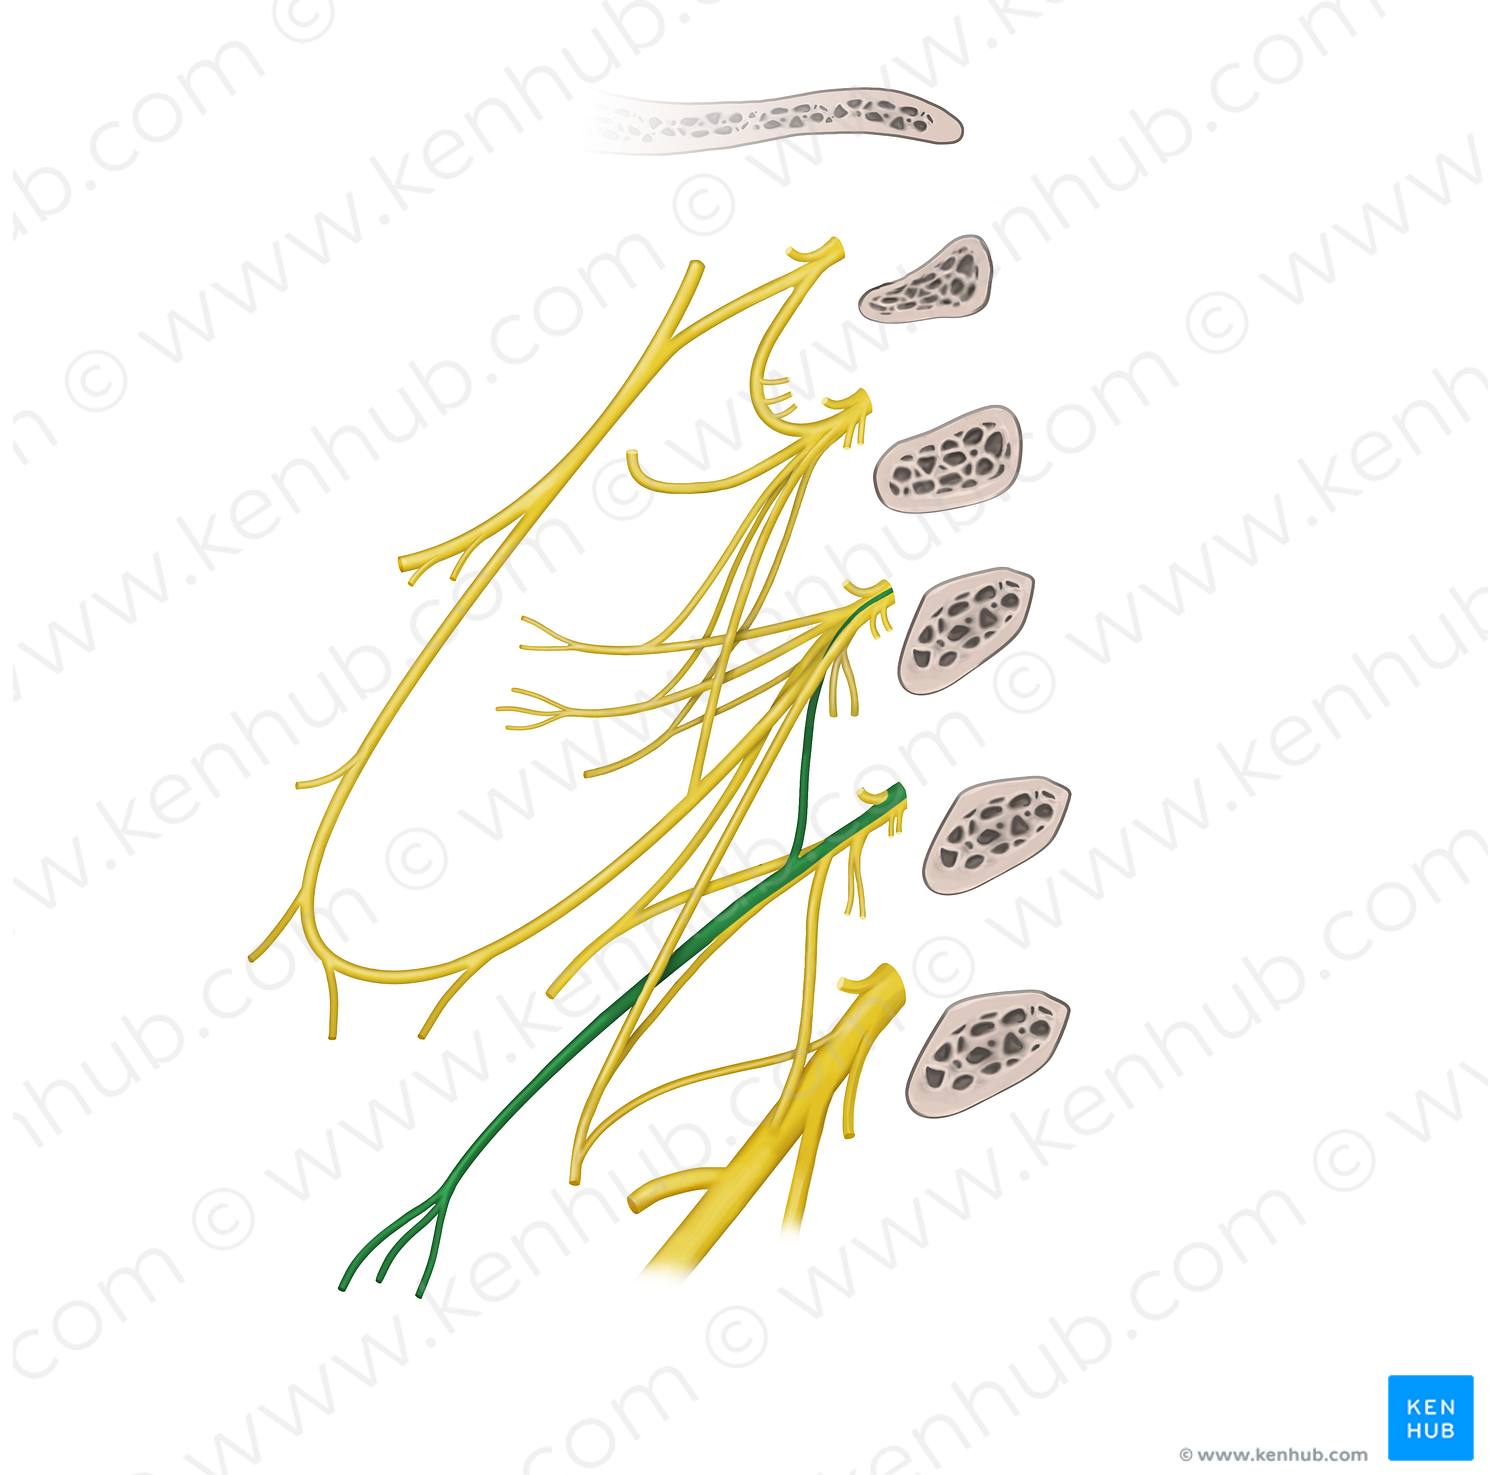 Supraclavicular nerves (#6281)